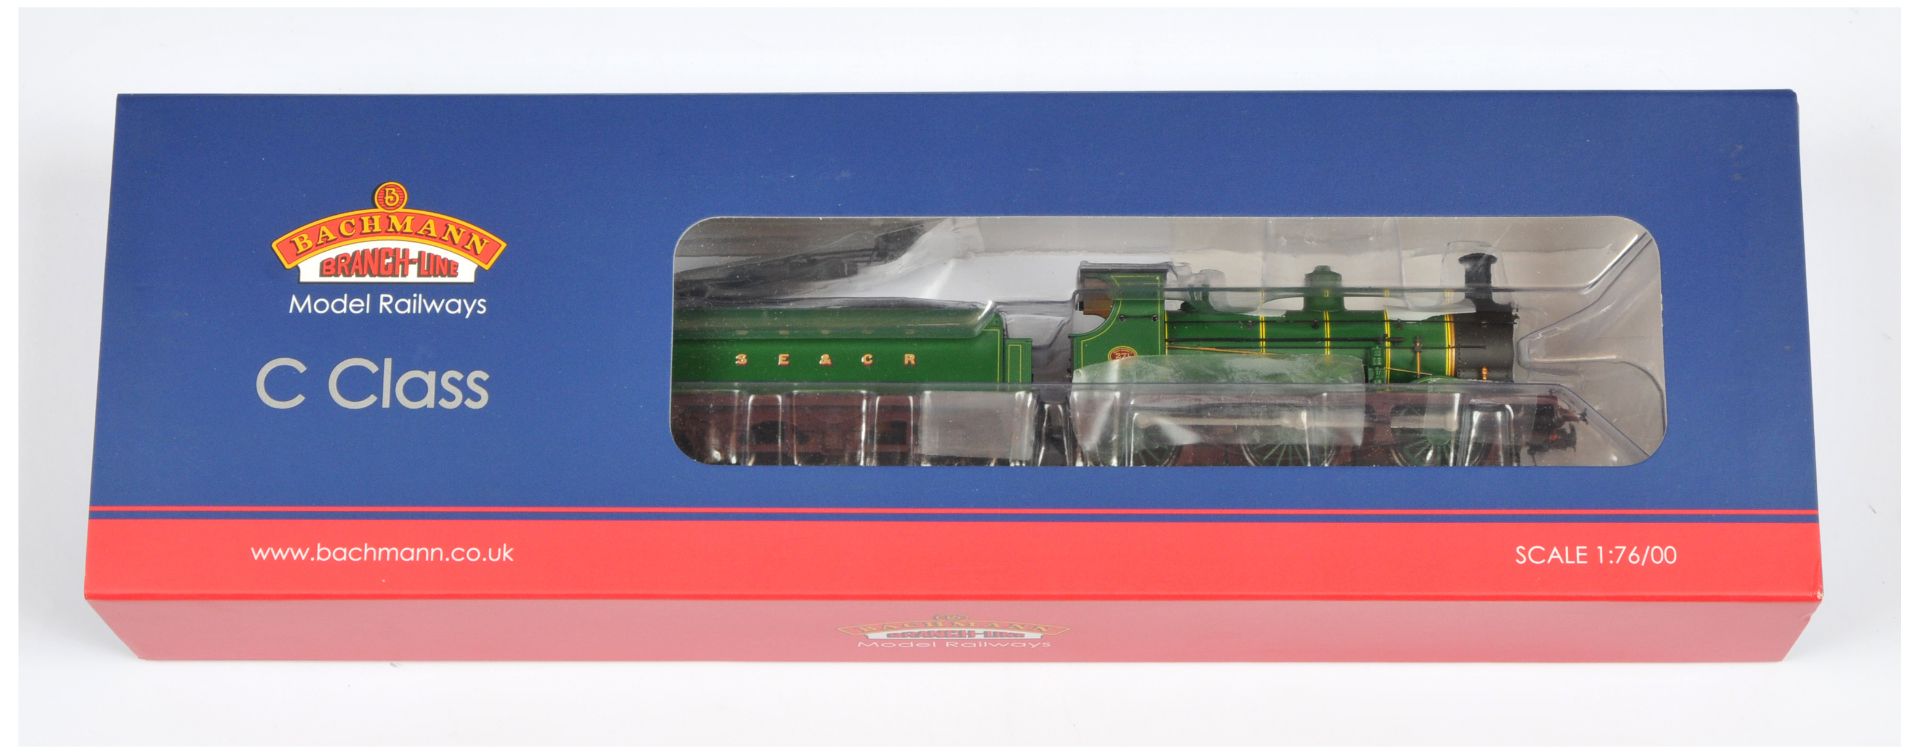 Bachmann OO Gauge 31-463 0-6-0 SE&CR lined green C Class Steam Locomotive No. 271